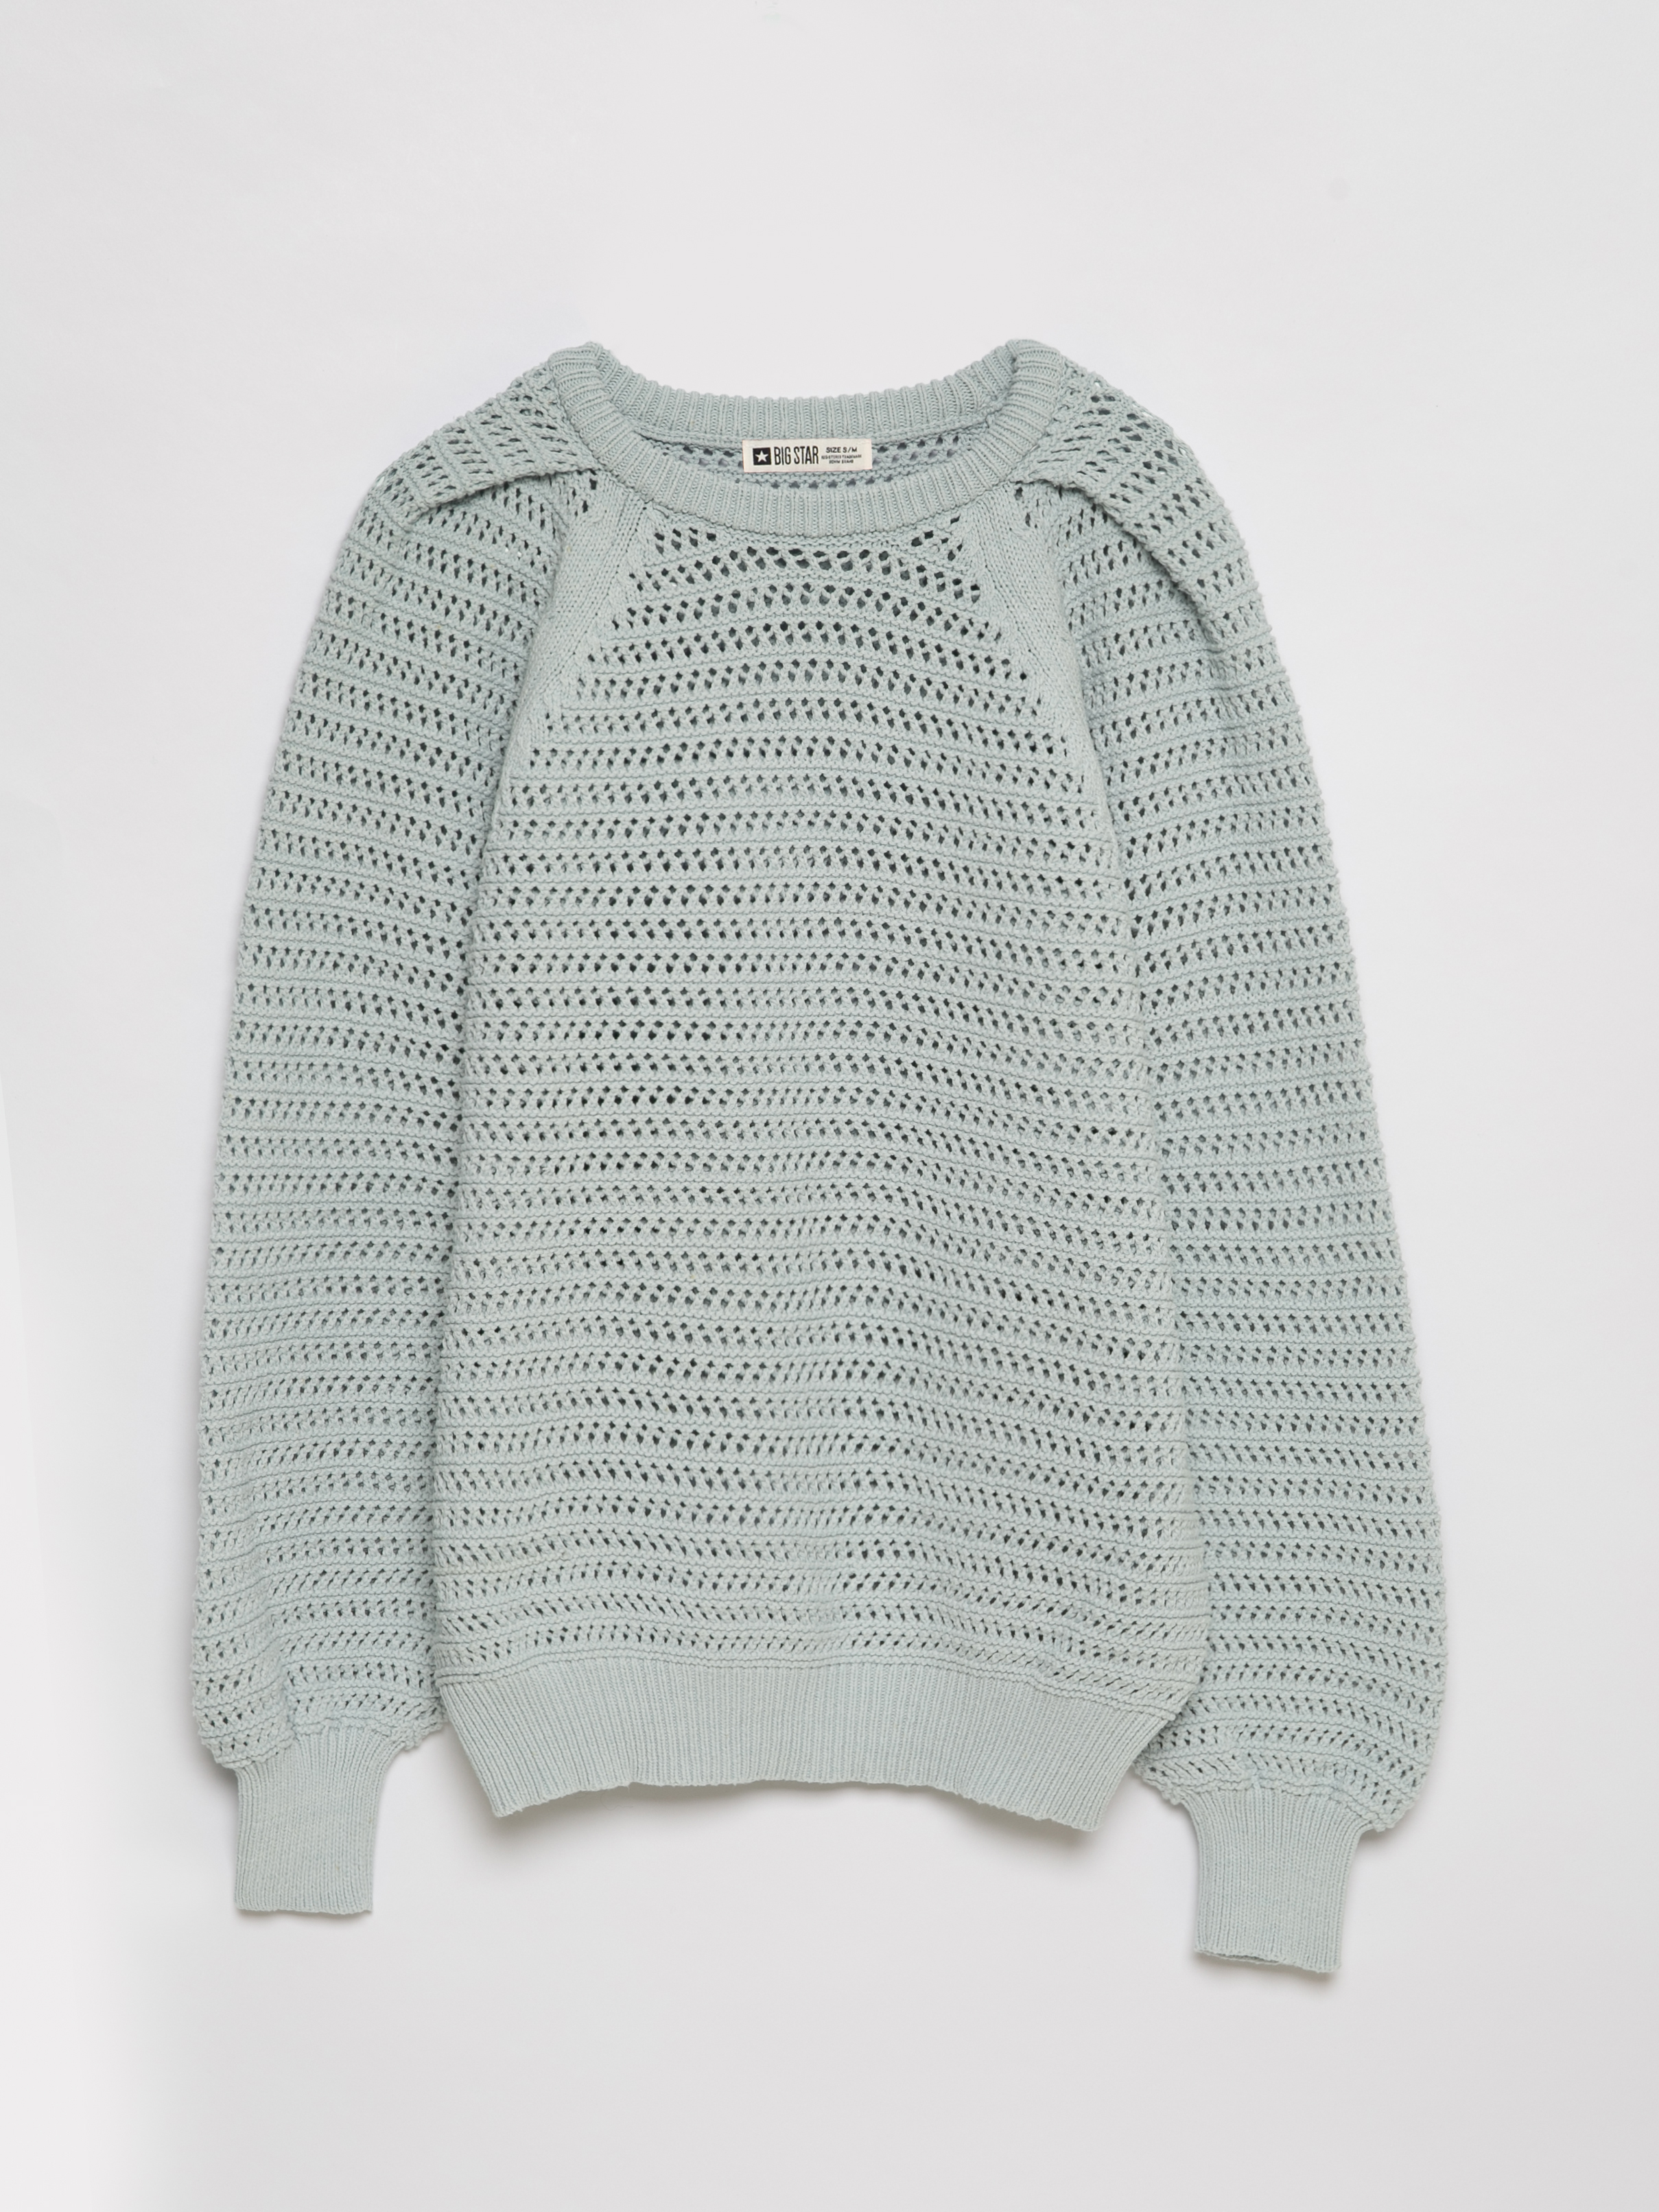 Big Star Woman's Sweater 161039 Light Grey-400